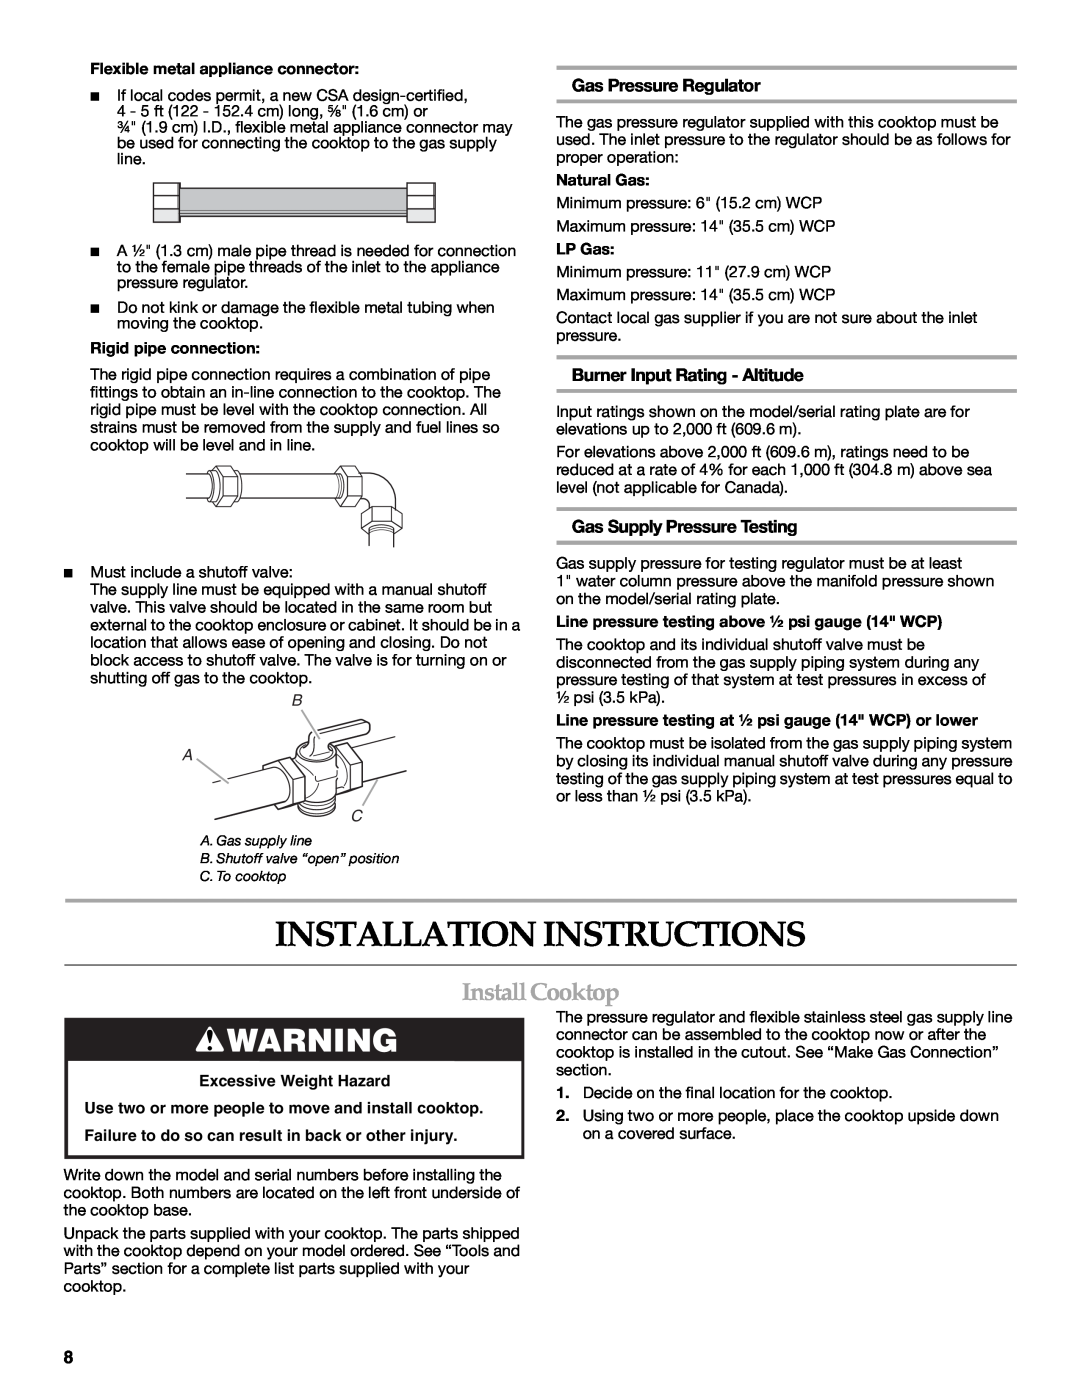 KitchenAid W10271686C Installation Instructions, Install Cooktop, Gas Pressure Regulator, Burner Input Rating - Altitude 